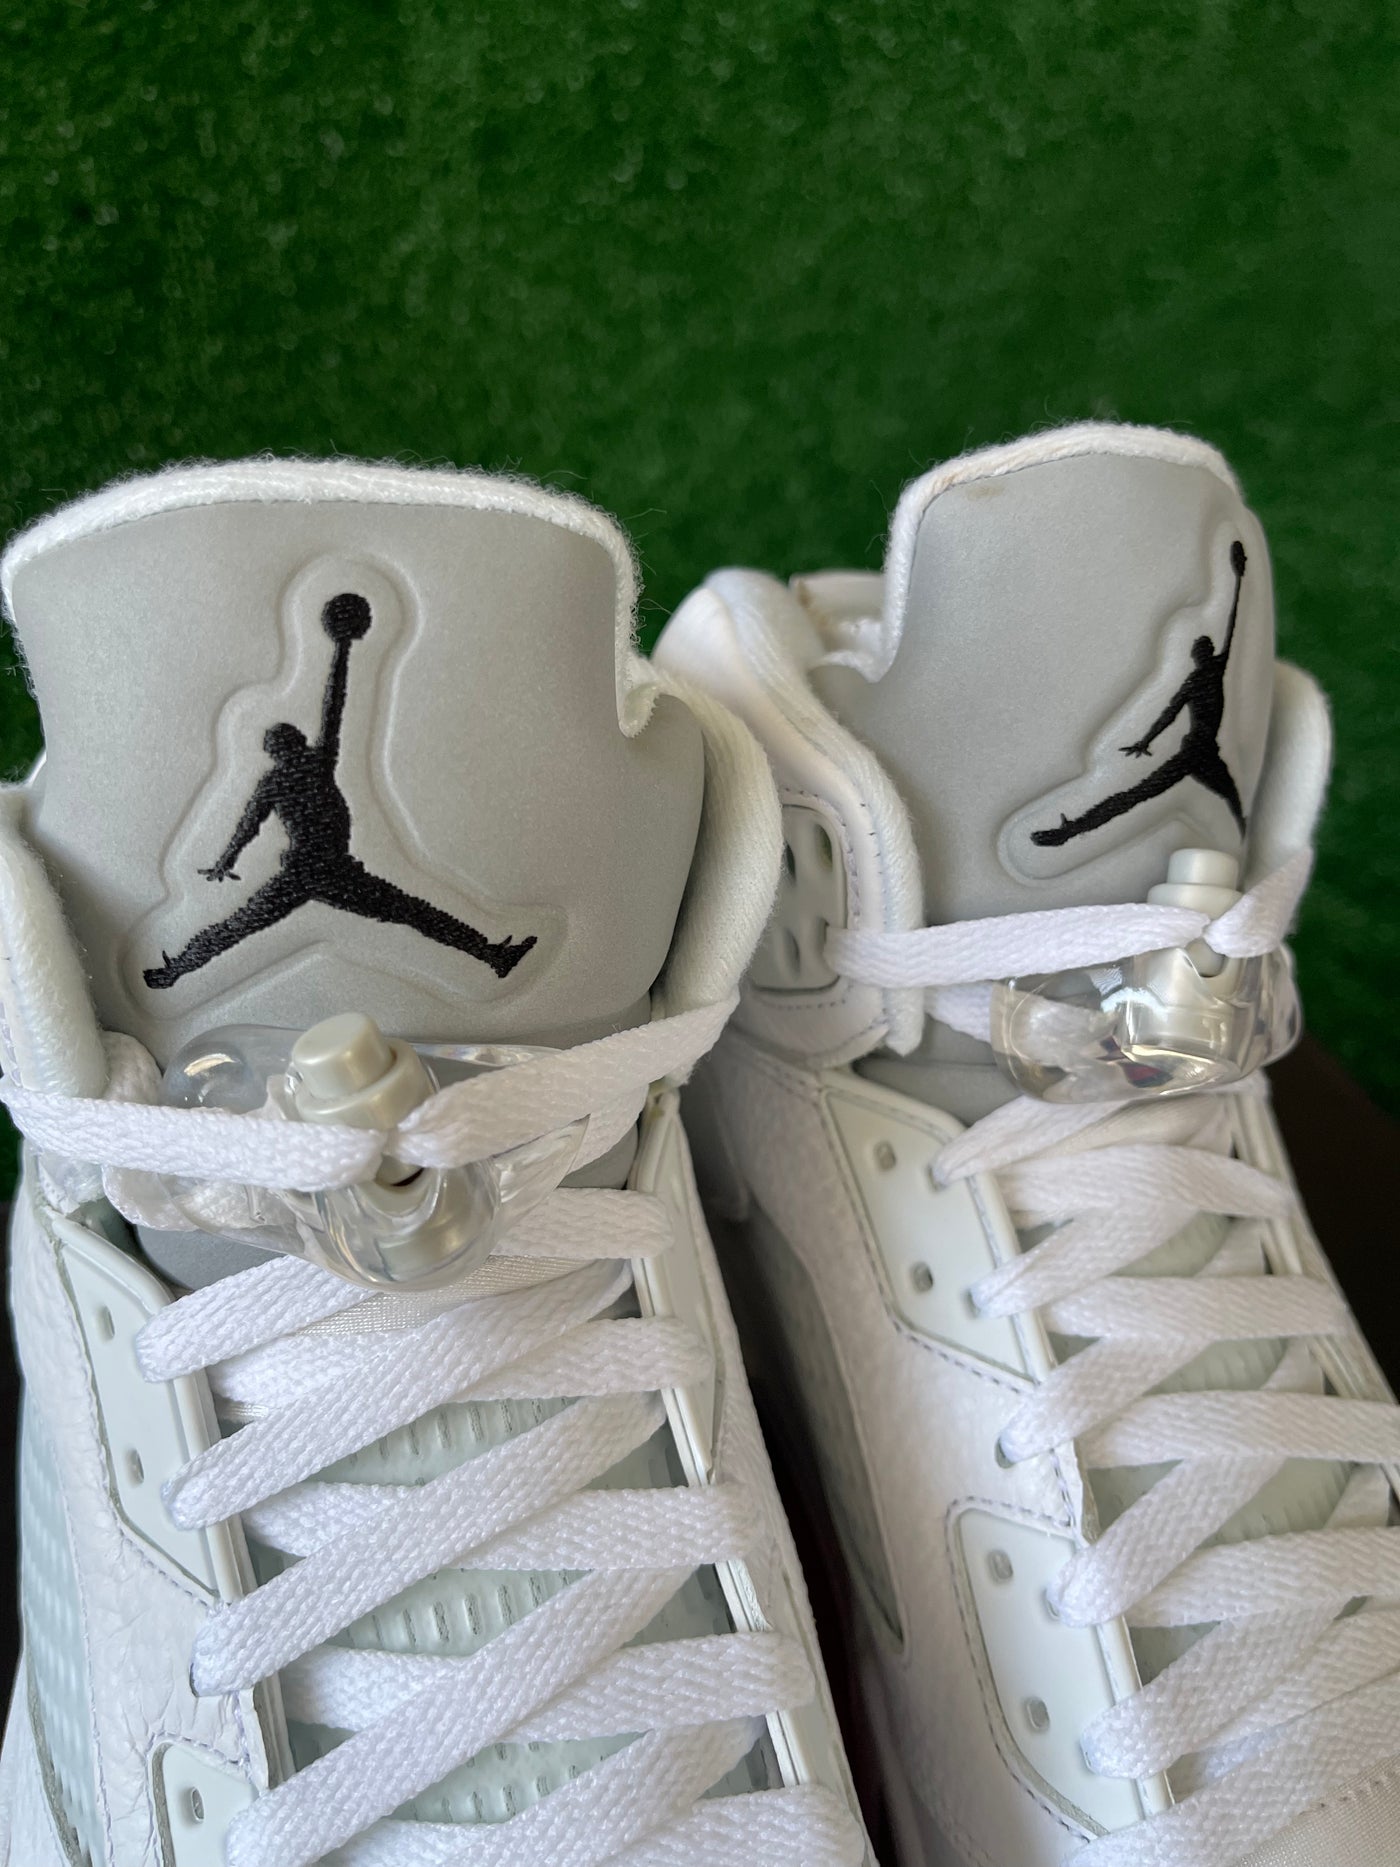 Air Jordan 5 Retro (2015) "Metallic White"